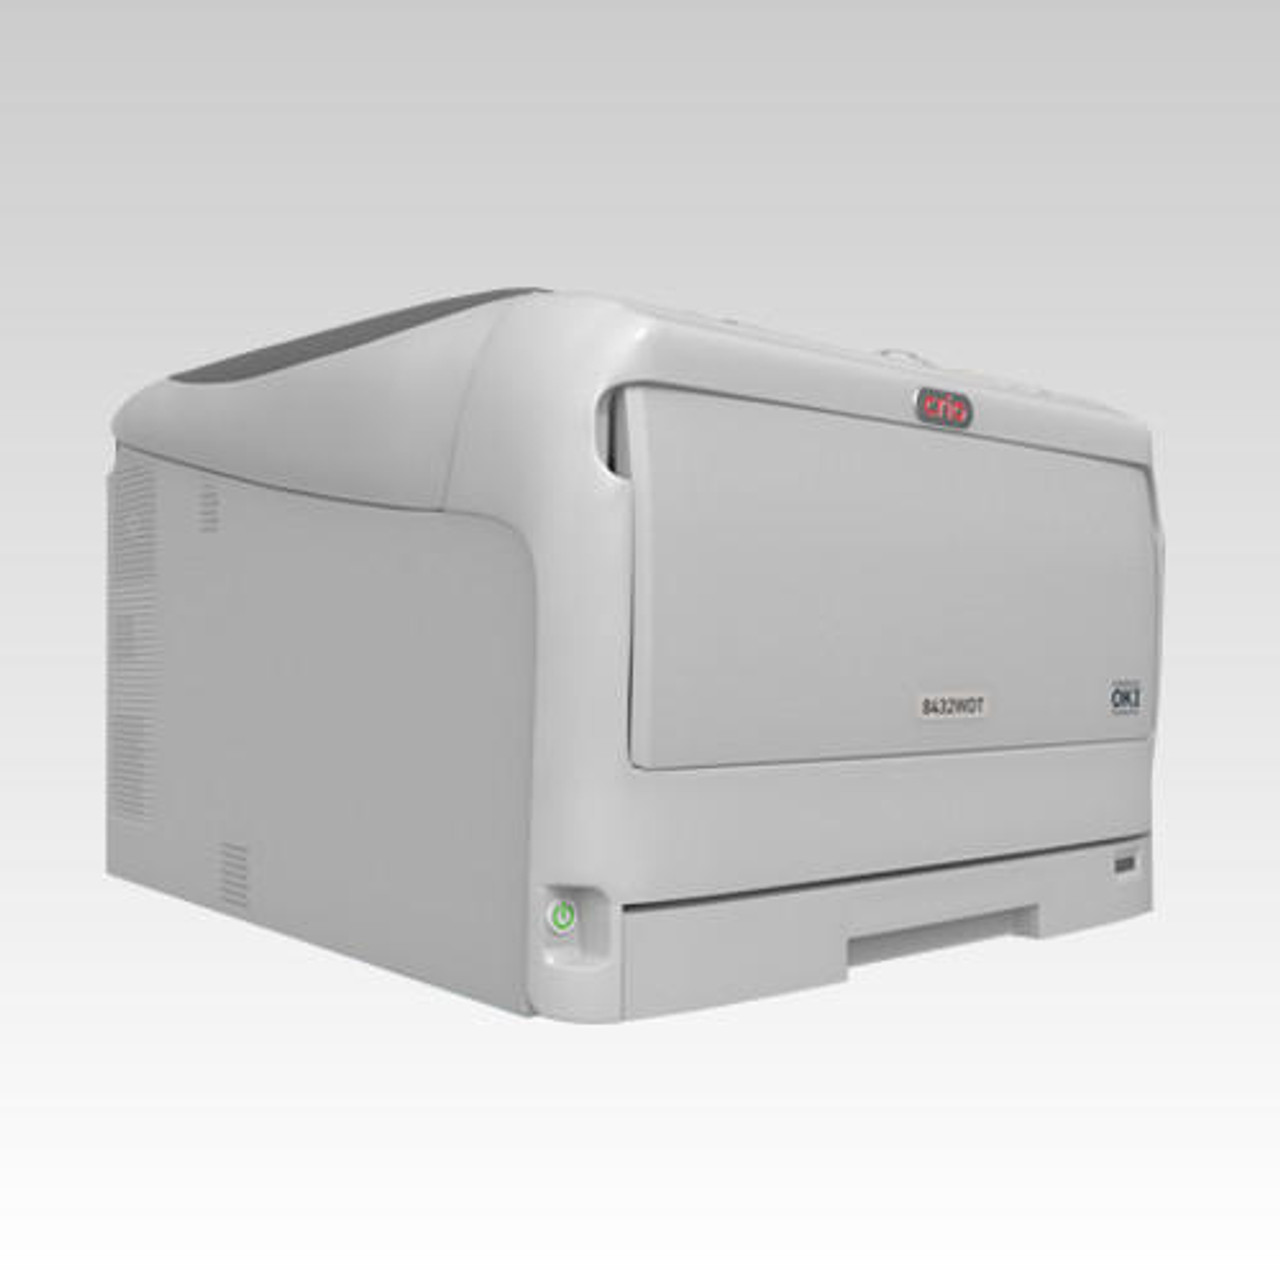 side view of crio white toner printer